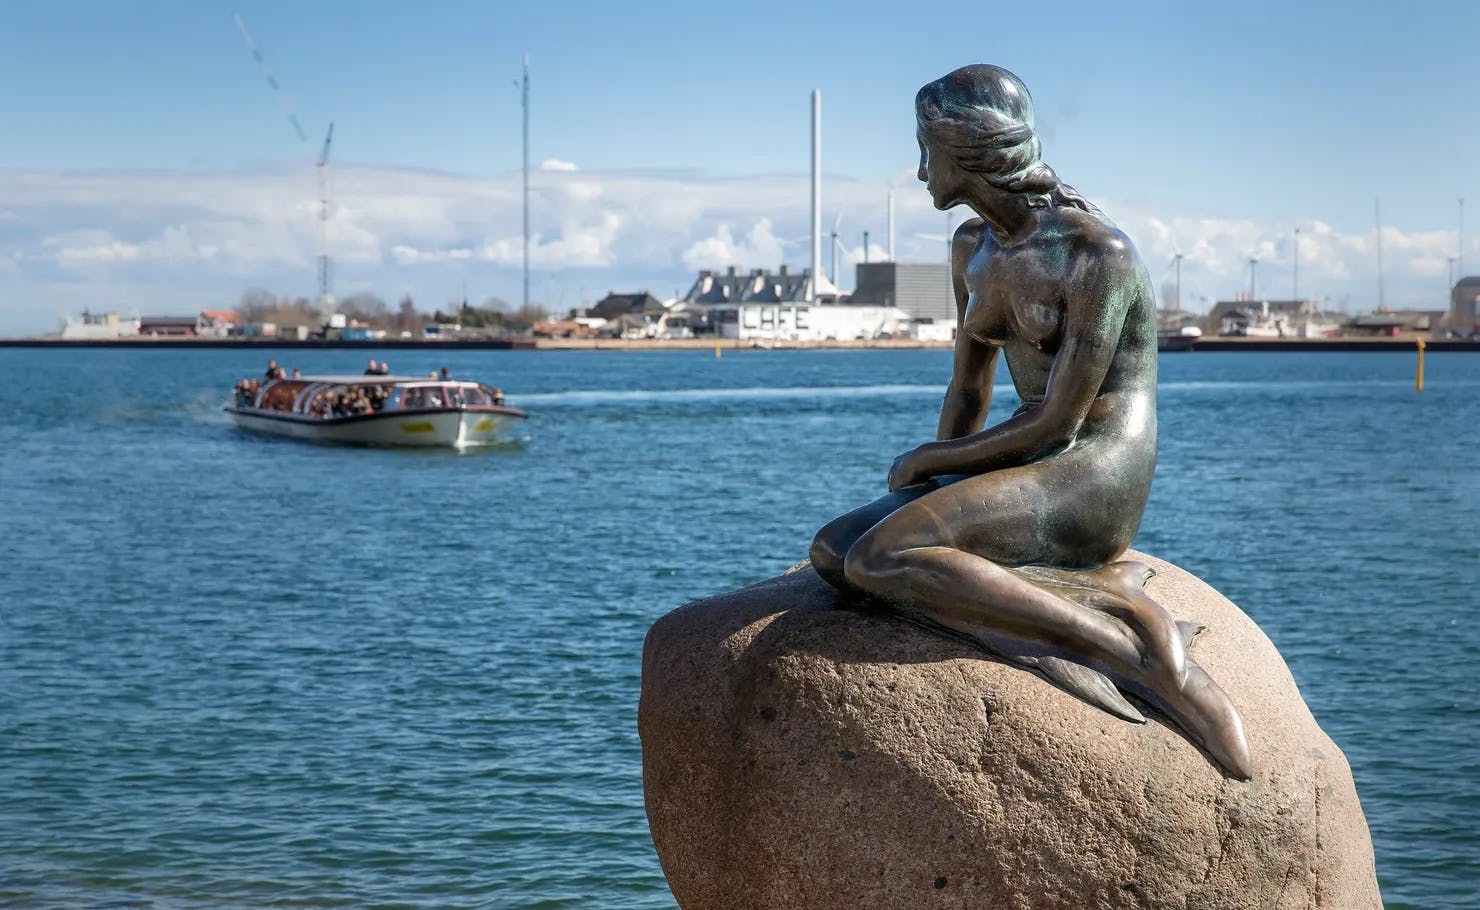 The little mermaid statue on the coastline in Copenhagen, Denmark